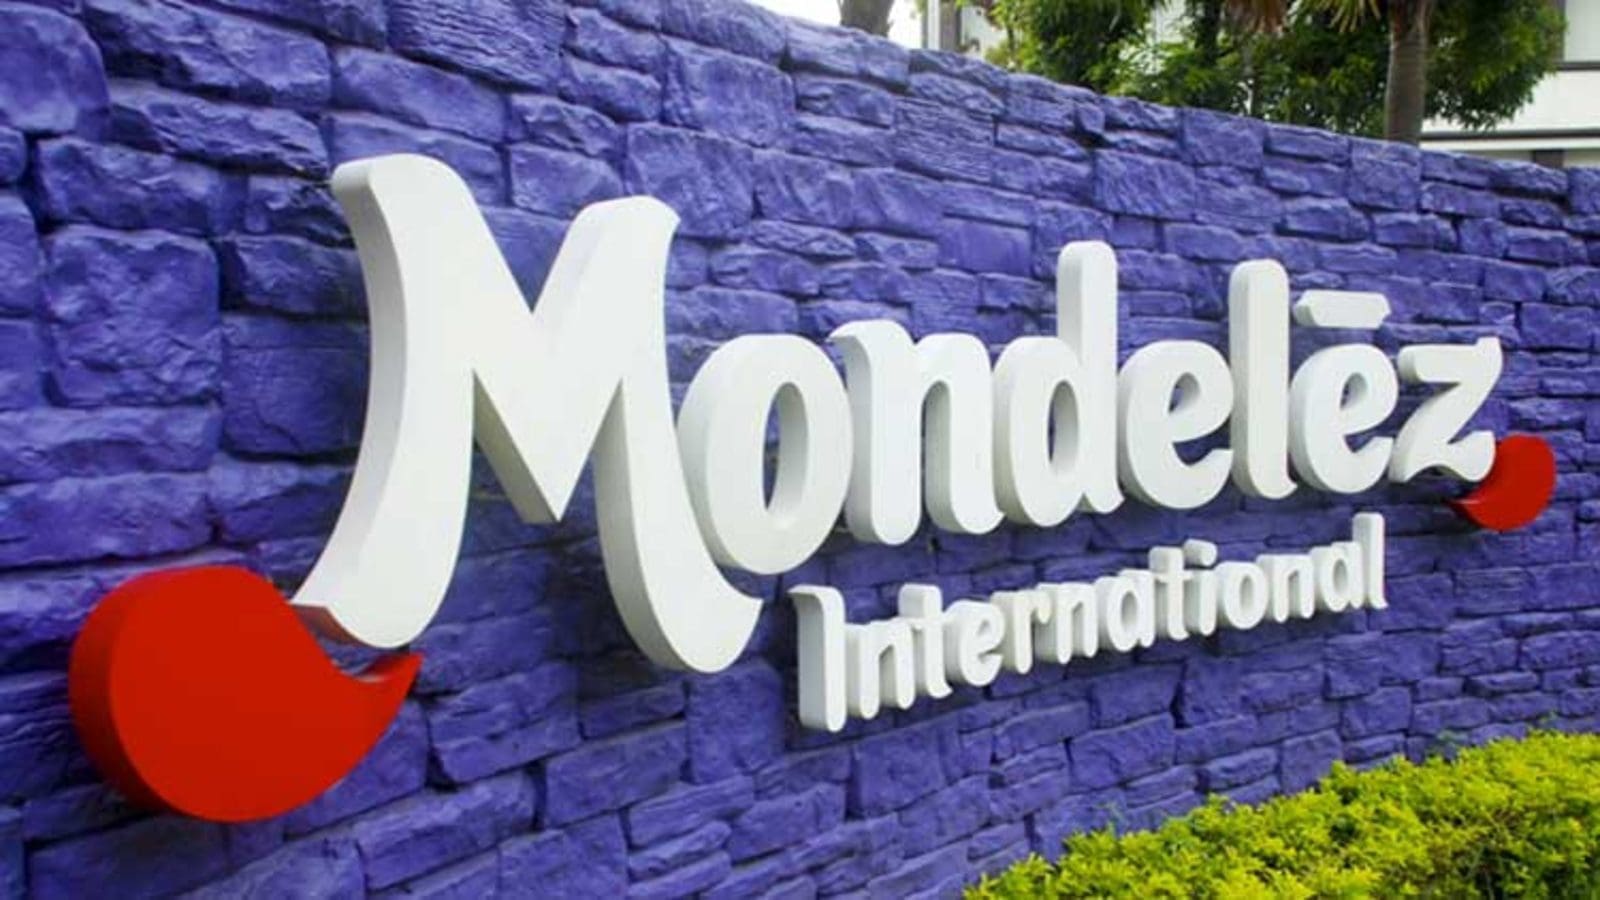 Mondelēz makes progress in human rights initiatives